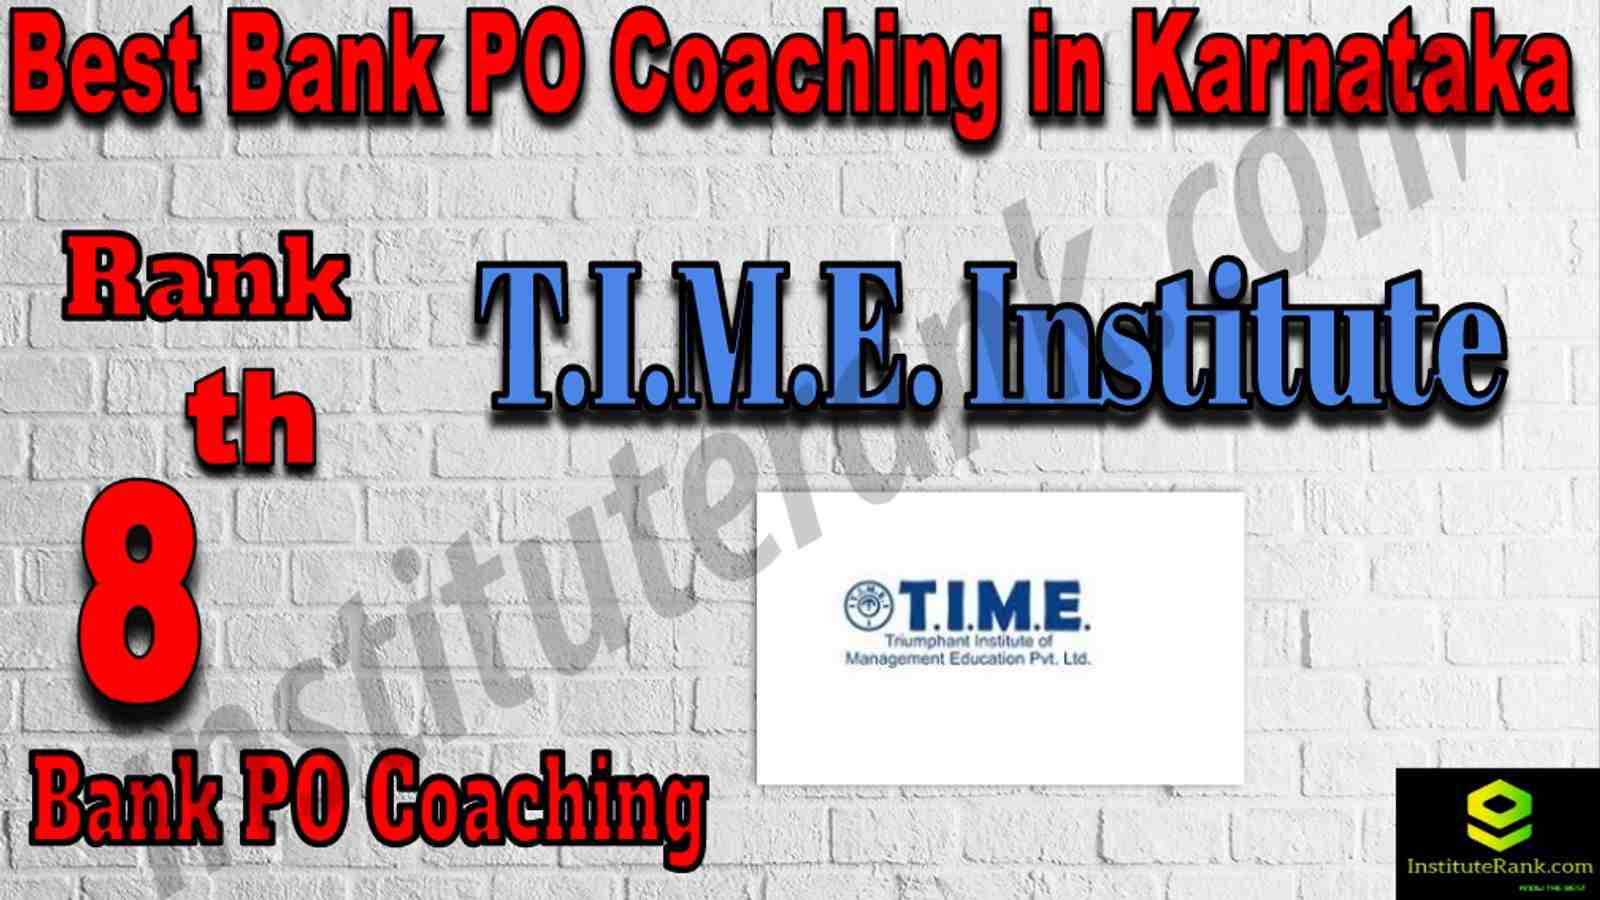 8th Best Bank PO Coaching in Karnataka